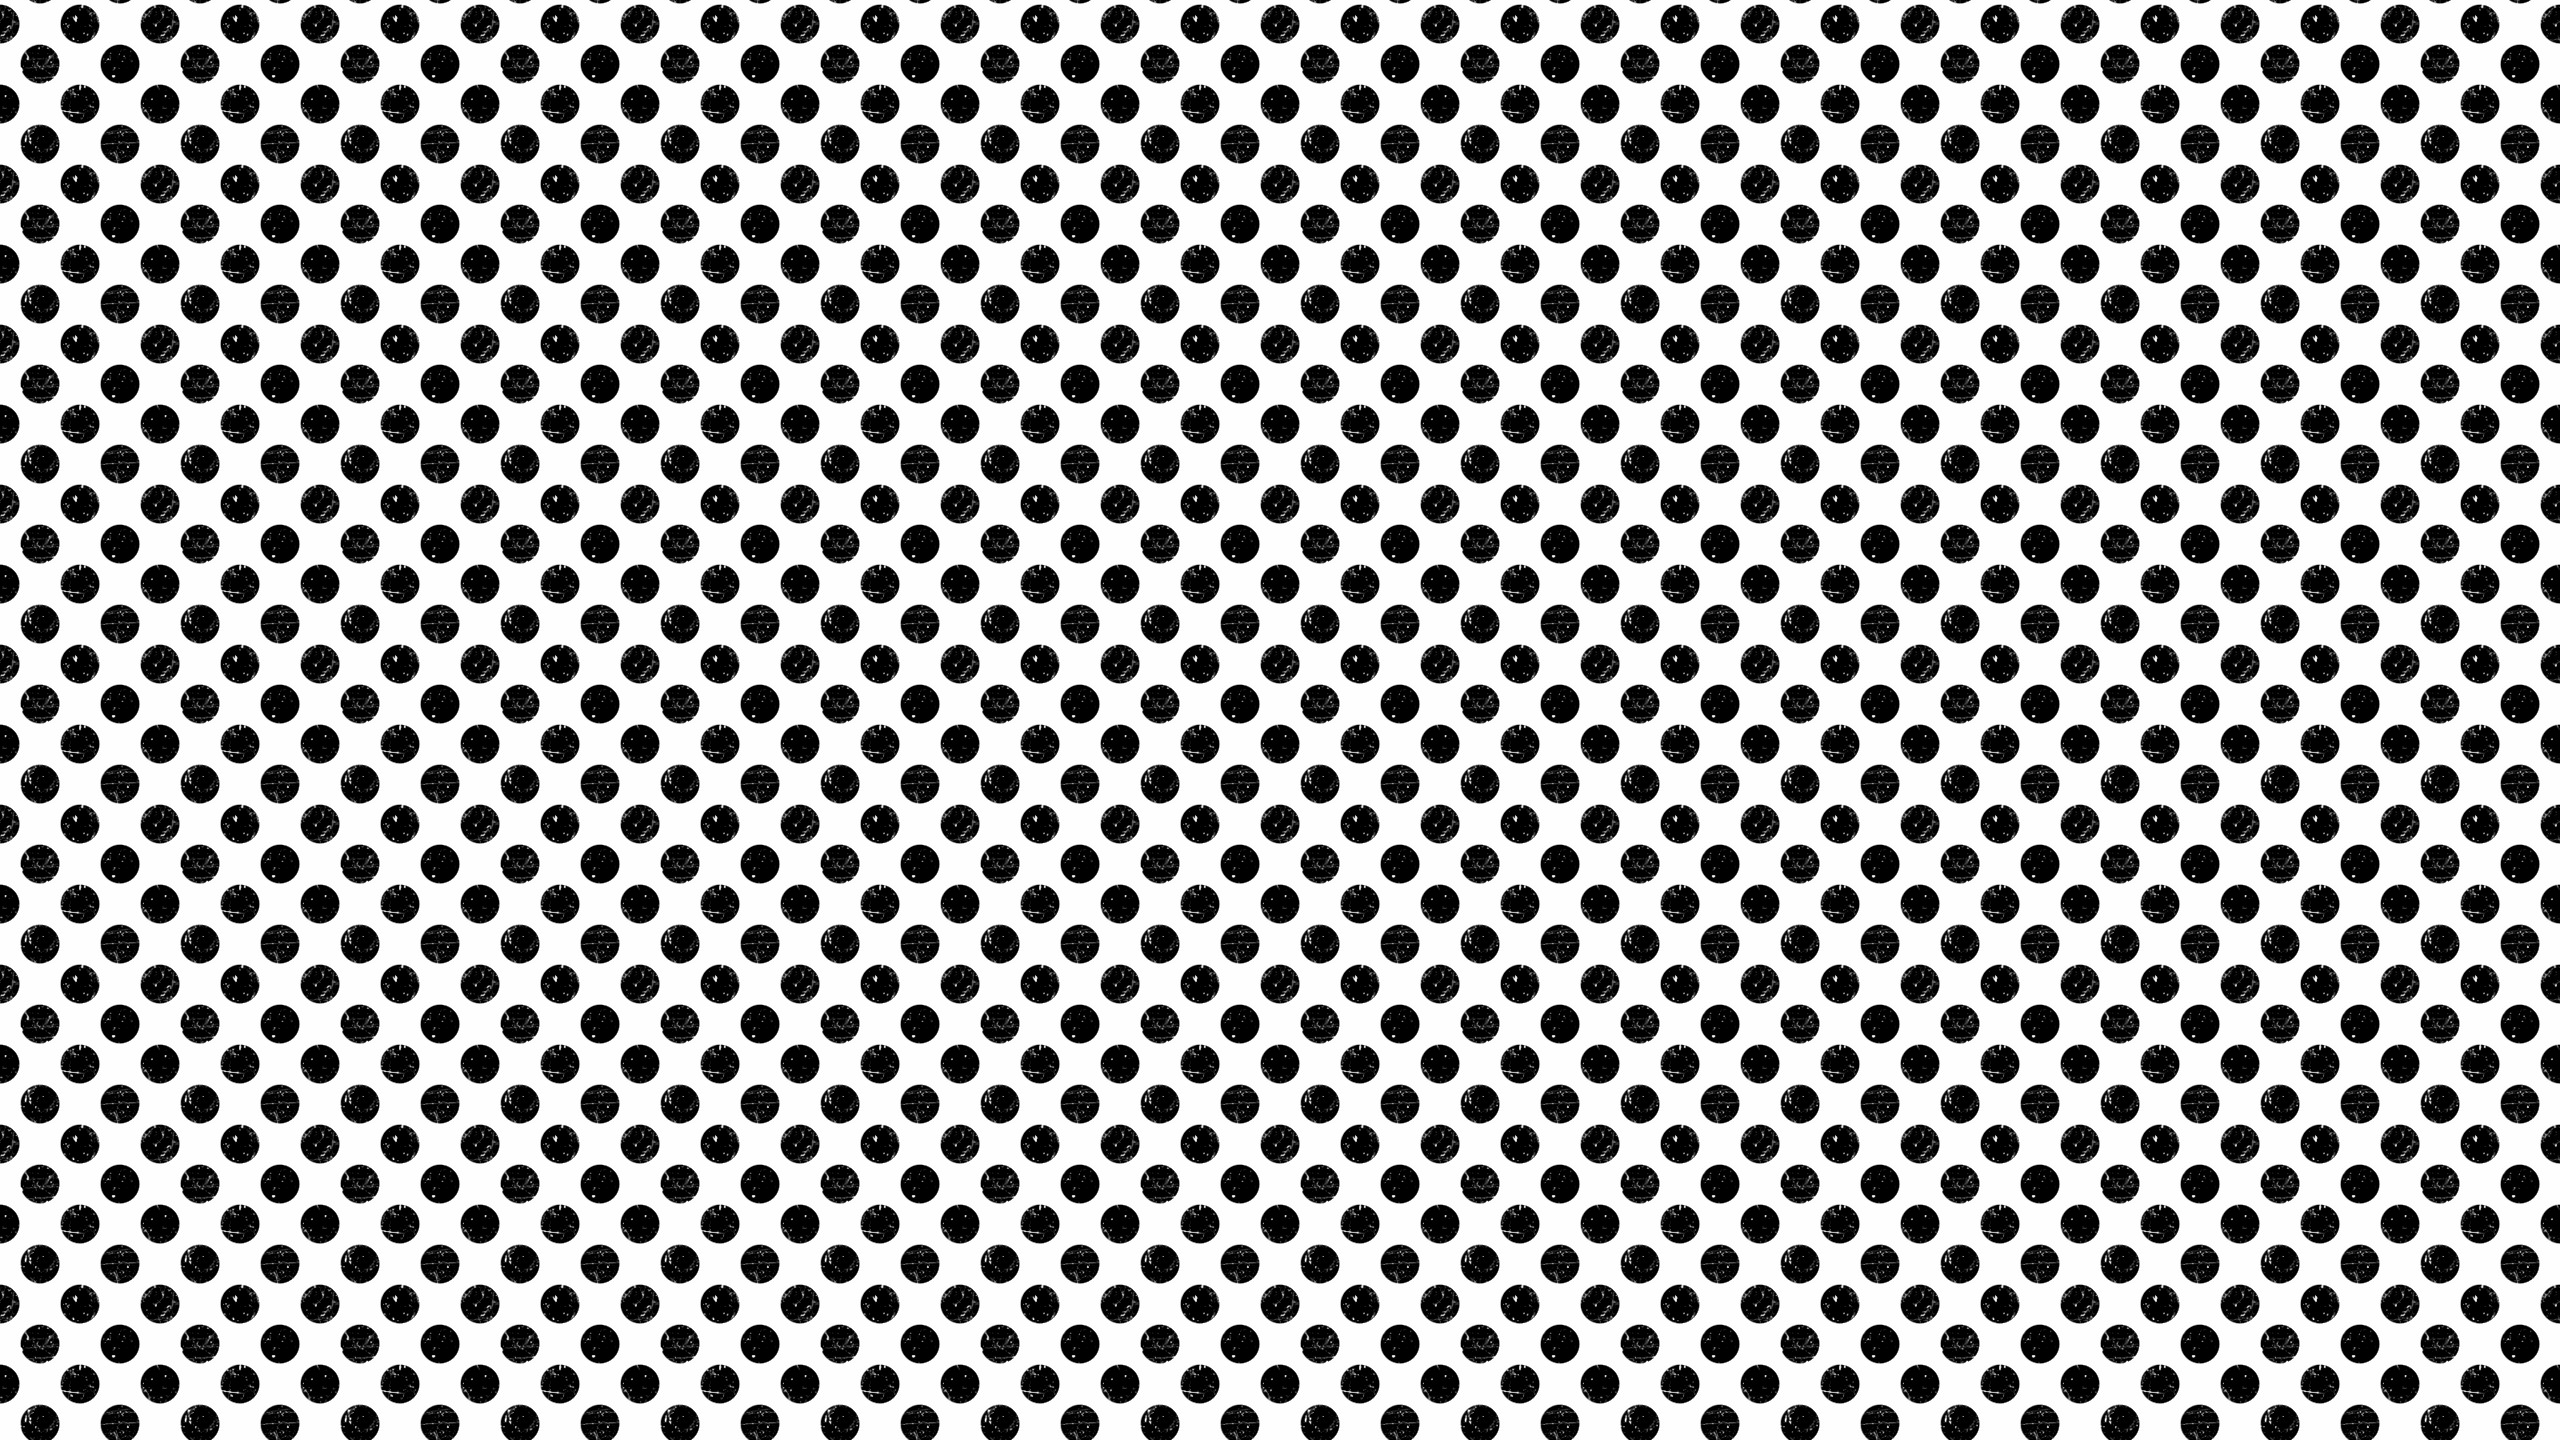 Black Dot Wallpapers